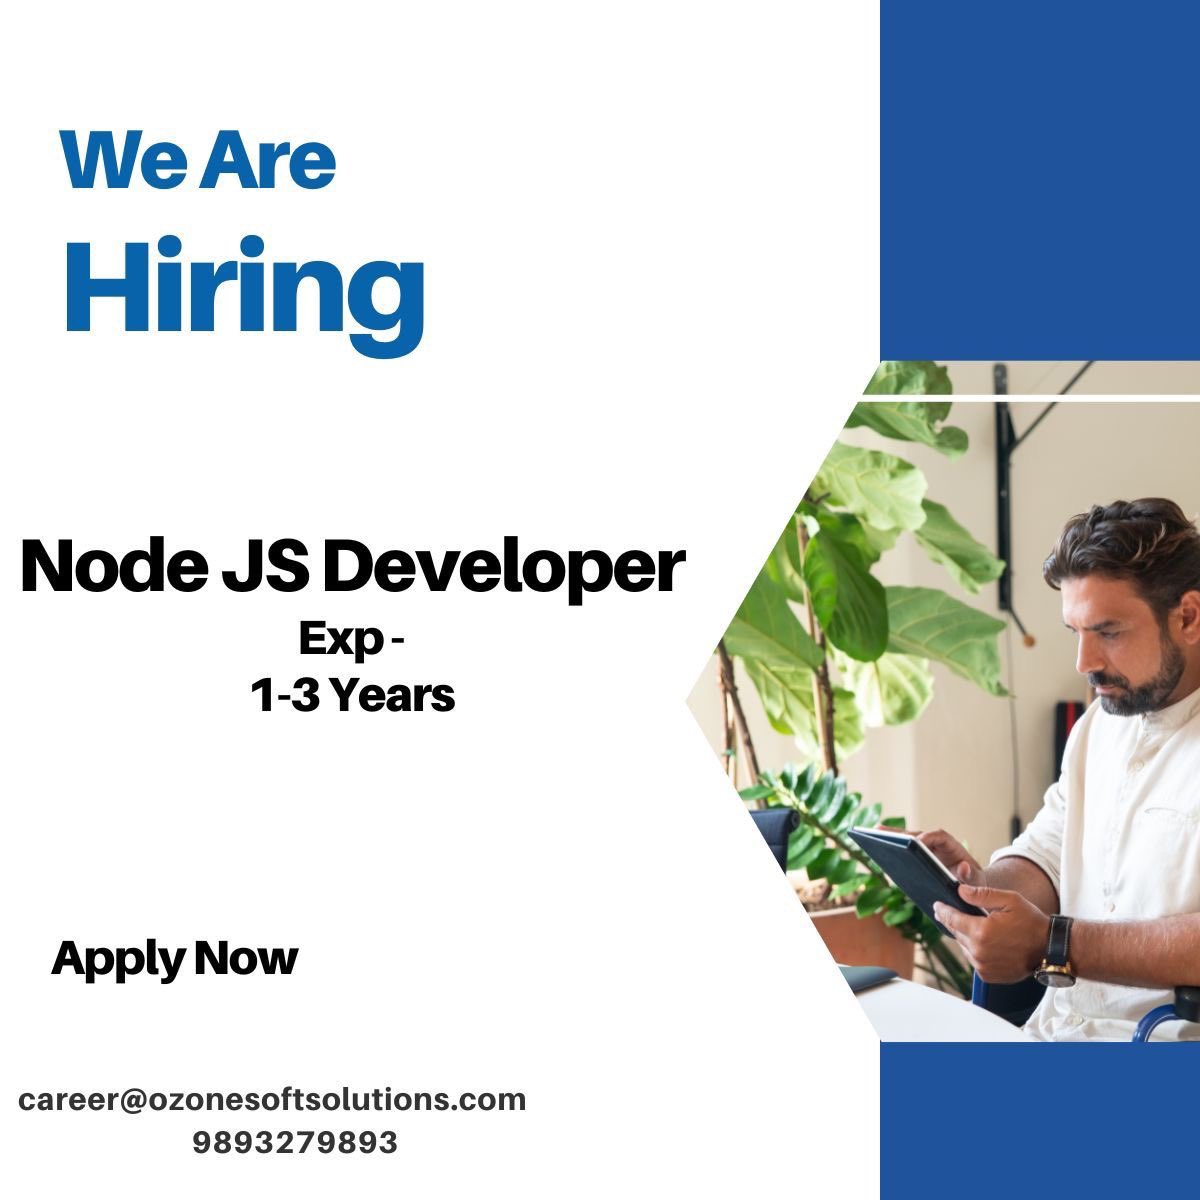 #Urgent Hiring for Node JS Developer

#hiring #Immediatejoiner #nodejs #nodejsdeveloper